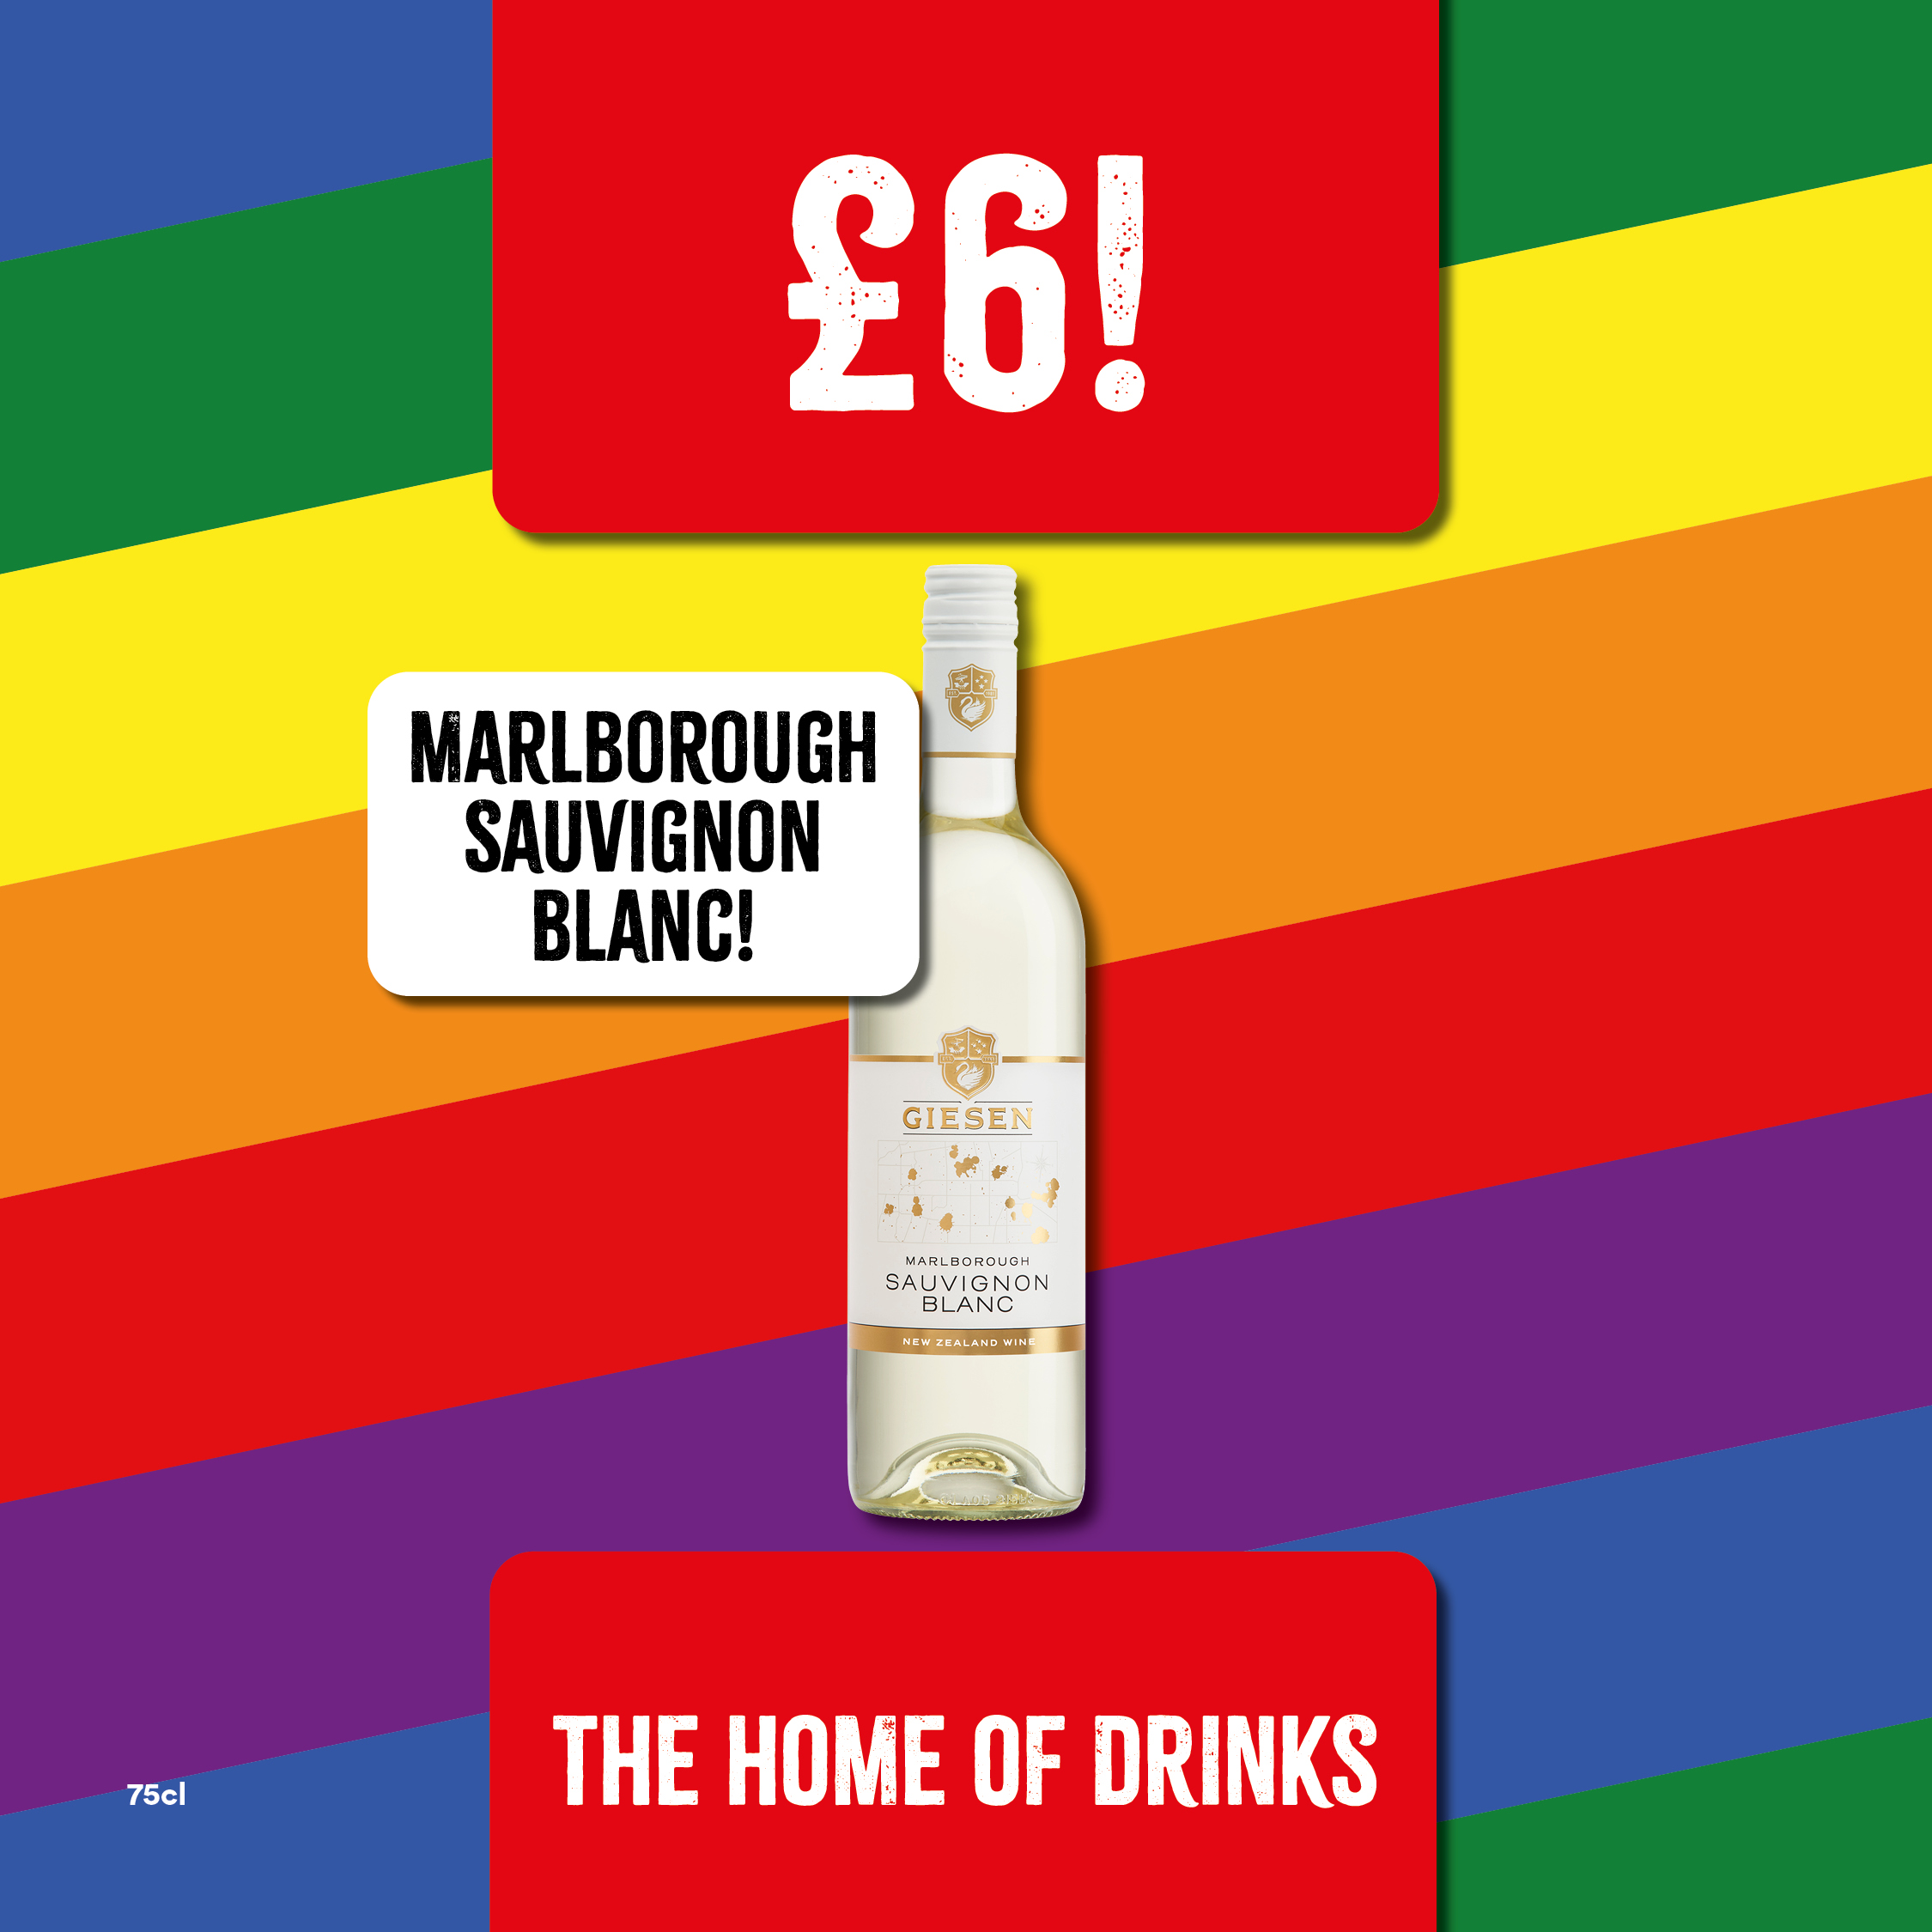 Only £6 Marlborough Sauvignon Blanc Bargain Booze Plus Winsford 01606 559039